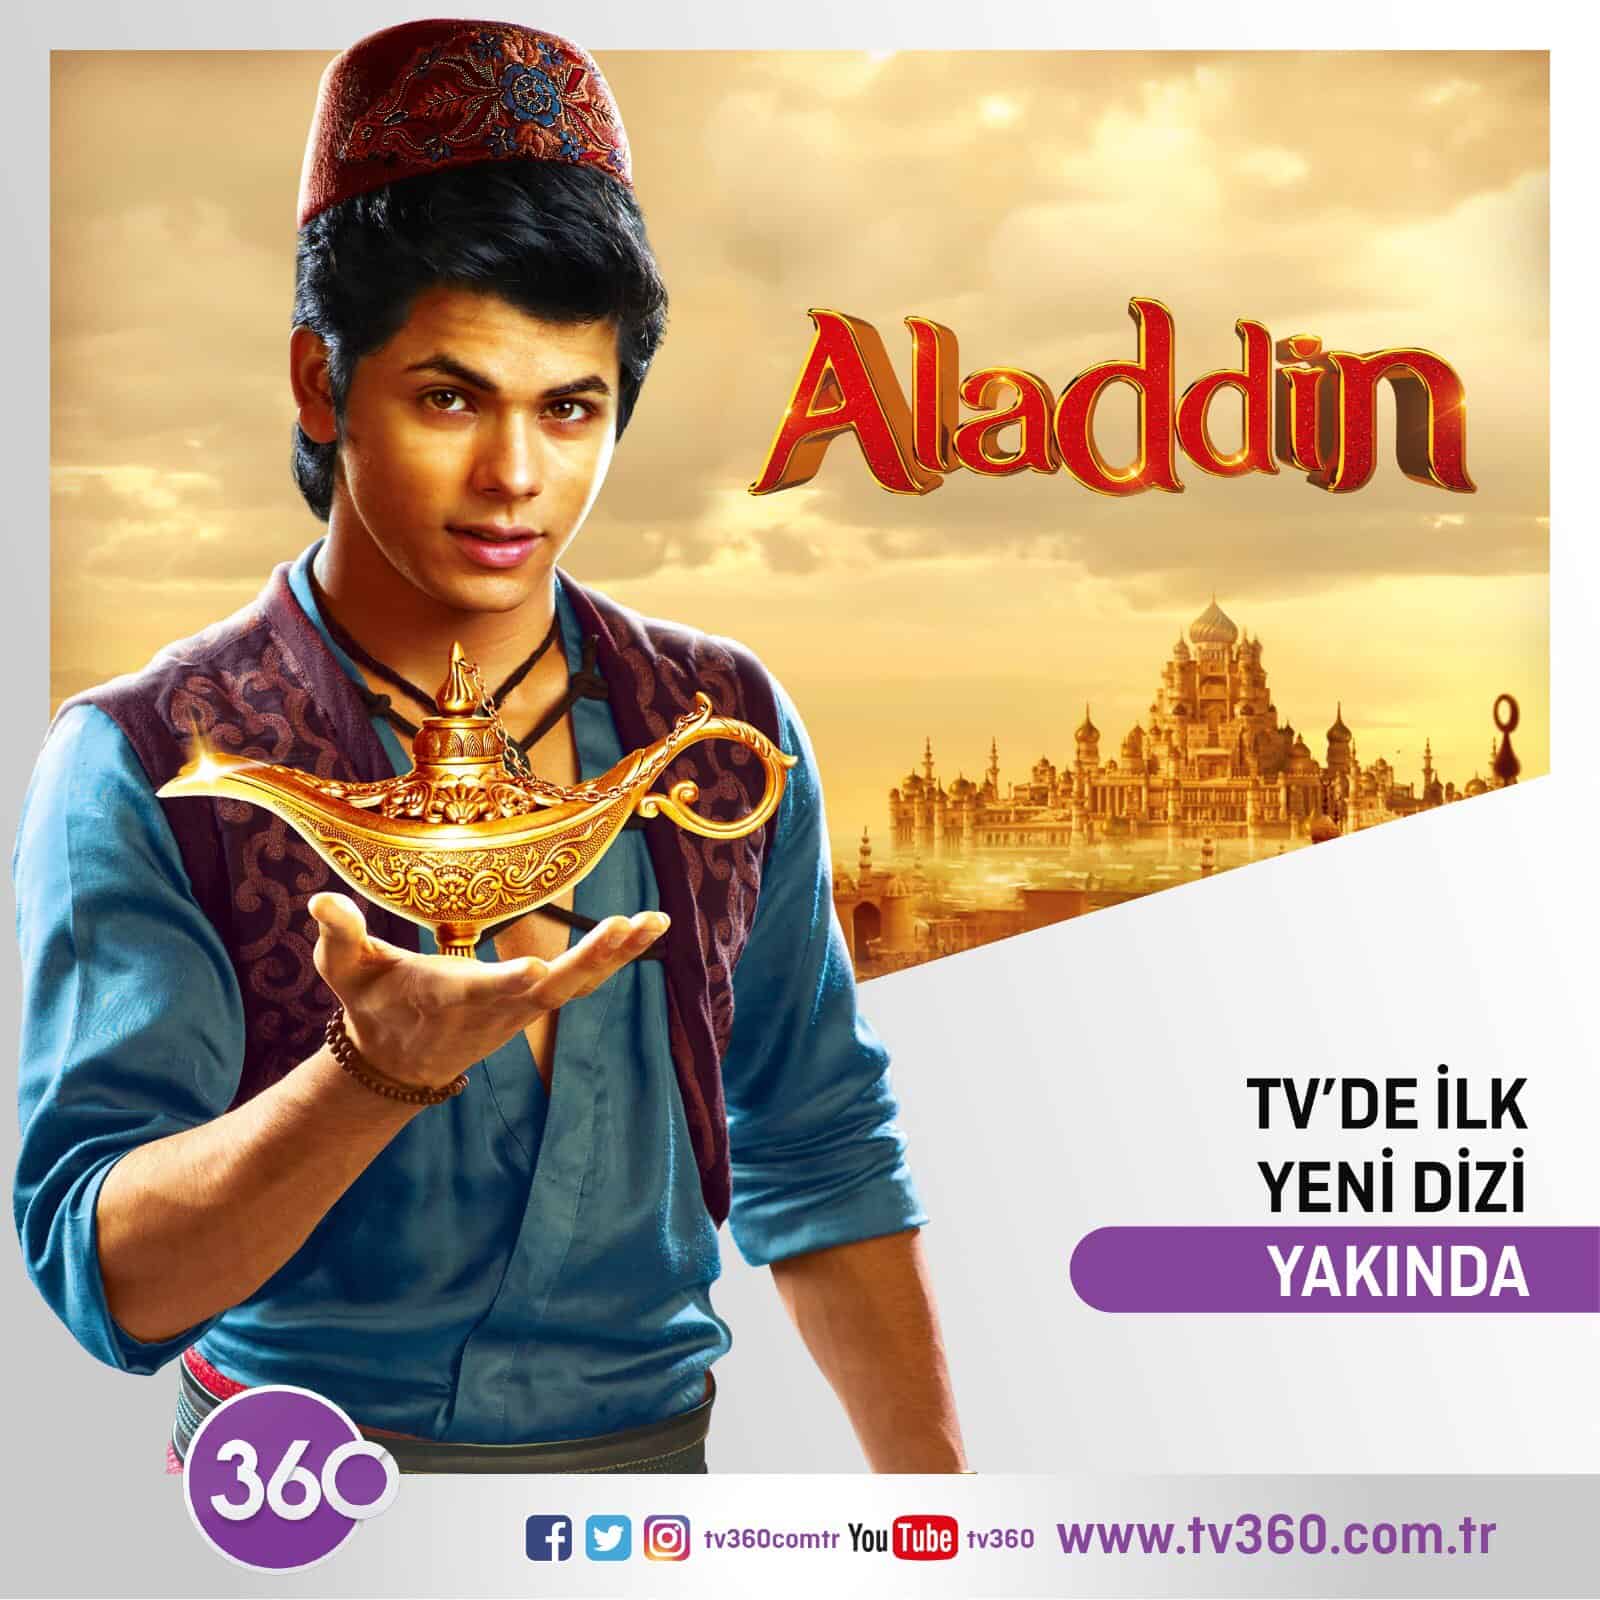 Aladdin Hint Dizisi Oyuncuları 360 Tv